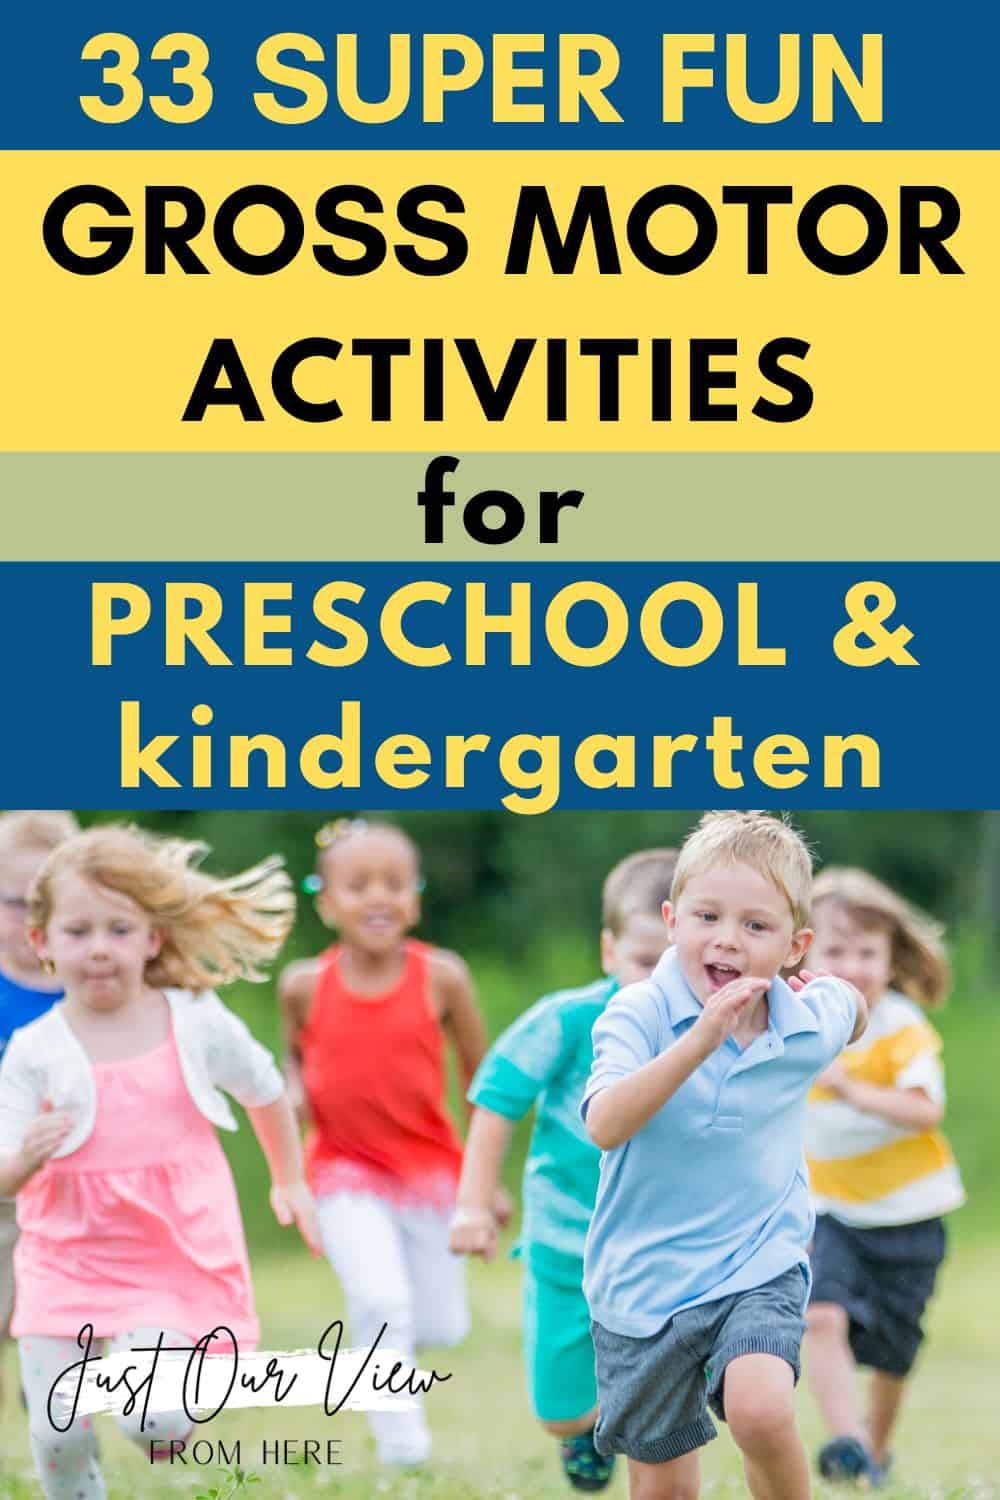 33-preschool-gross-motor-skills-activities-playtime-ideas-for-kids